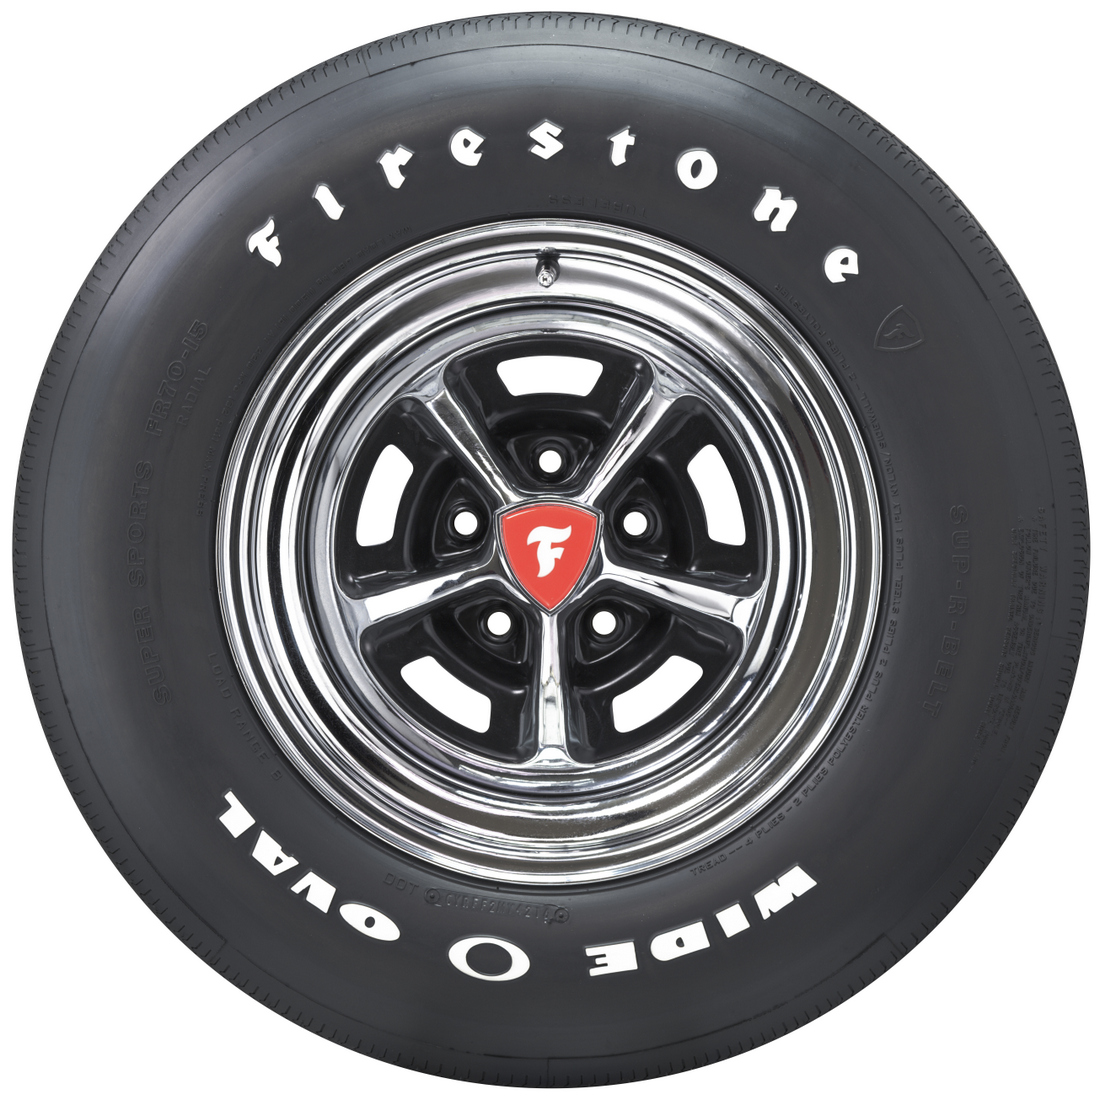 revolutionary-new-firestone-tires-hit-the-muscle-car-market-hotrod